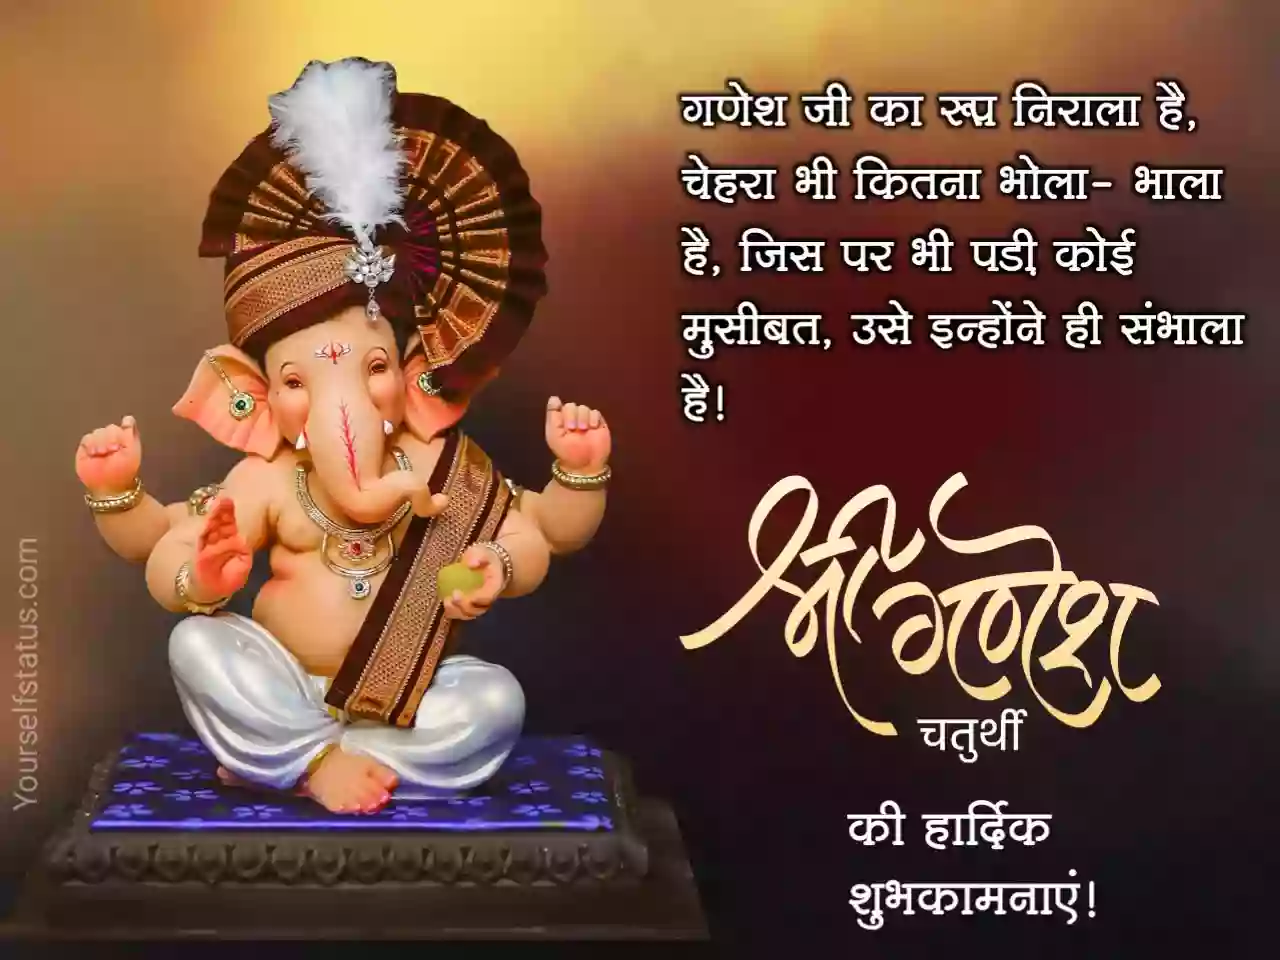 Ganesh chaturthi wishes images in hindi